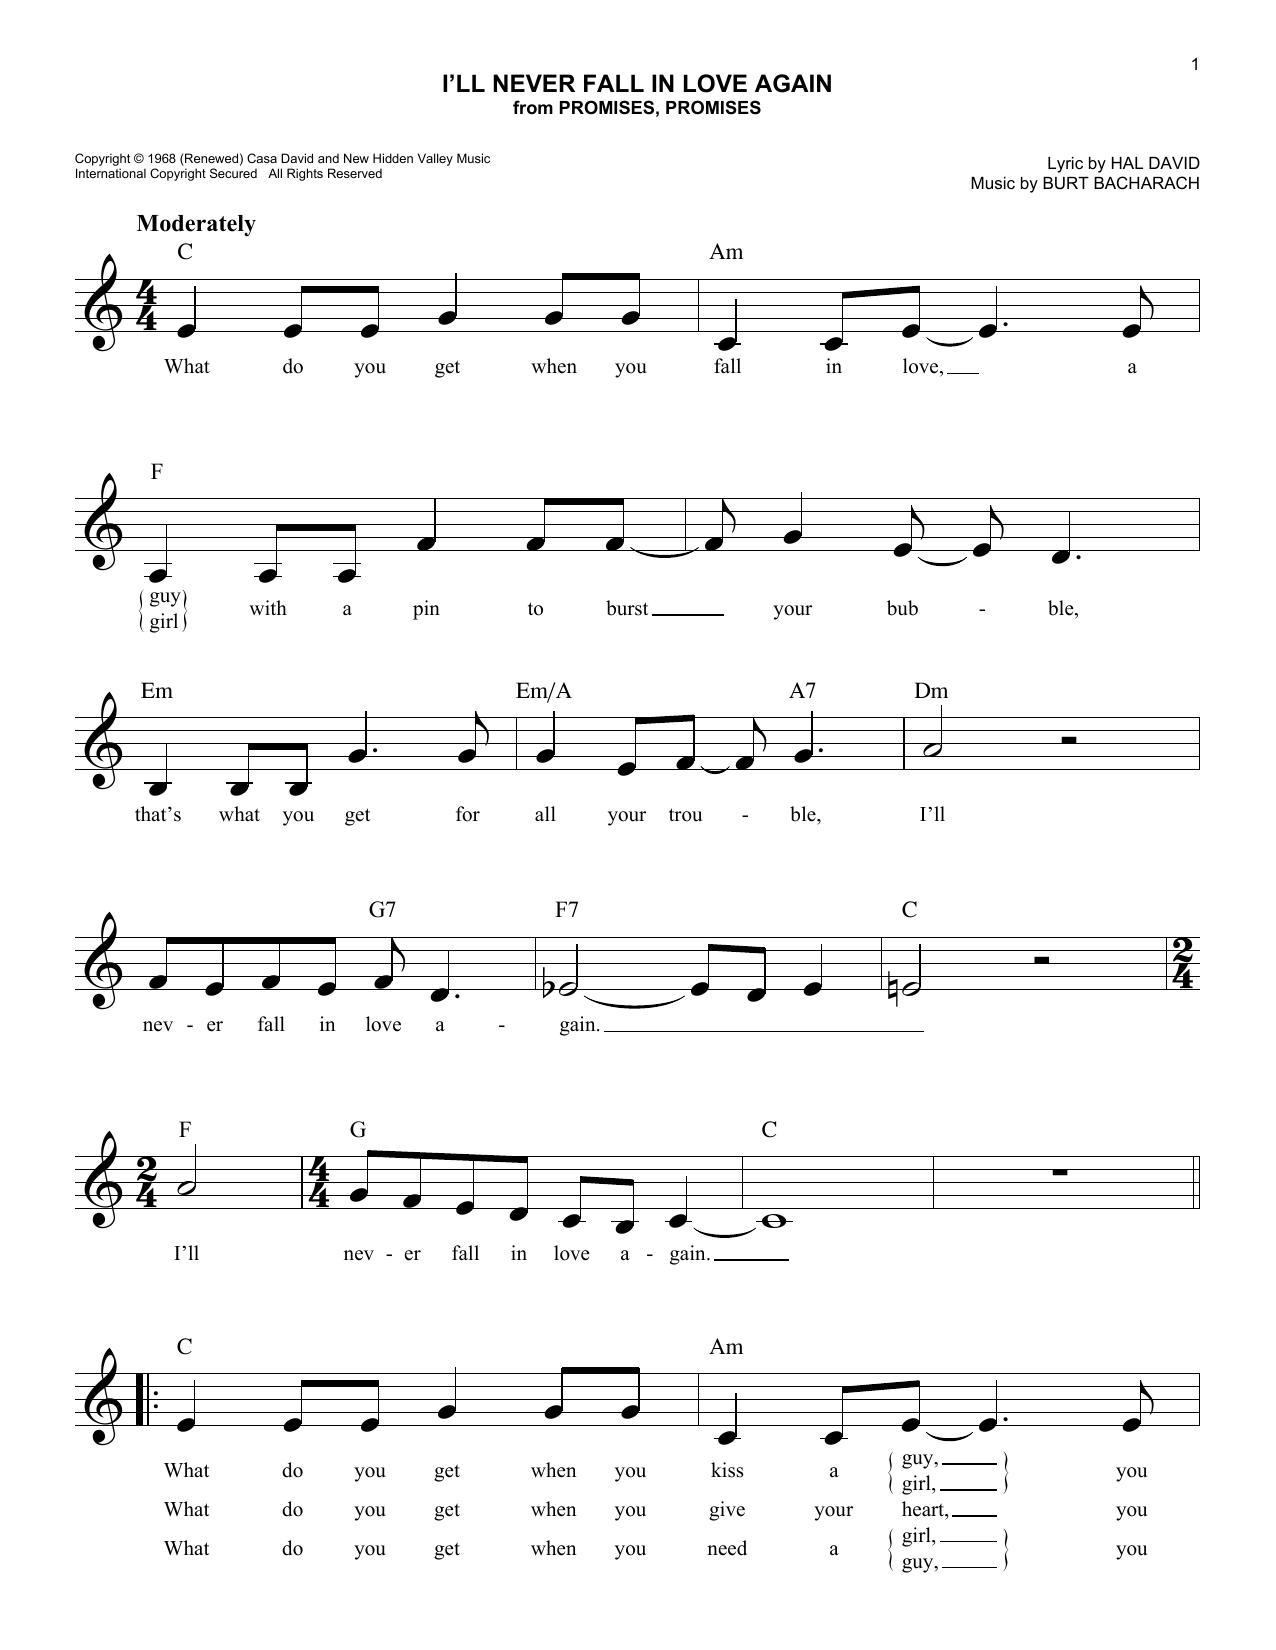 Burt Bacharach I'll Never Fall In Love Again sheet music notes and chords arranged for Lead Sheet / Fake Book